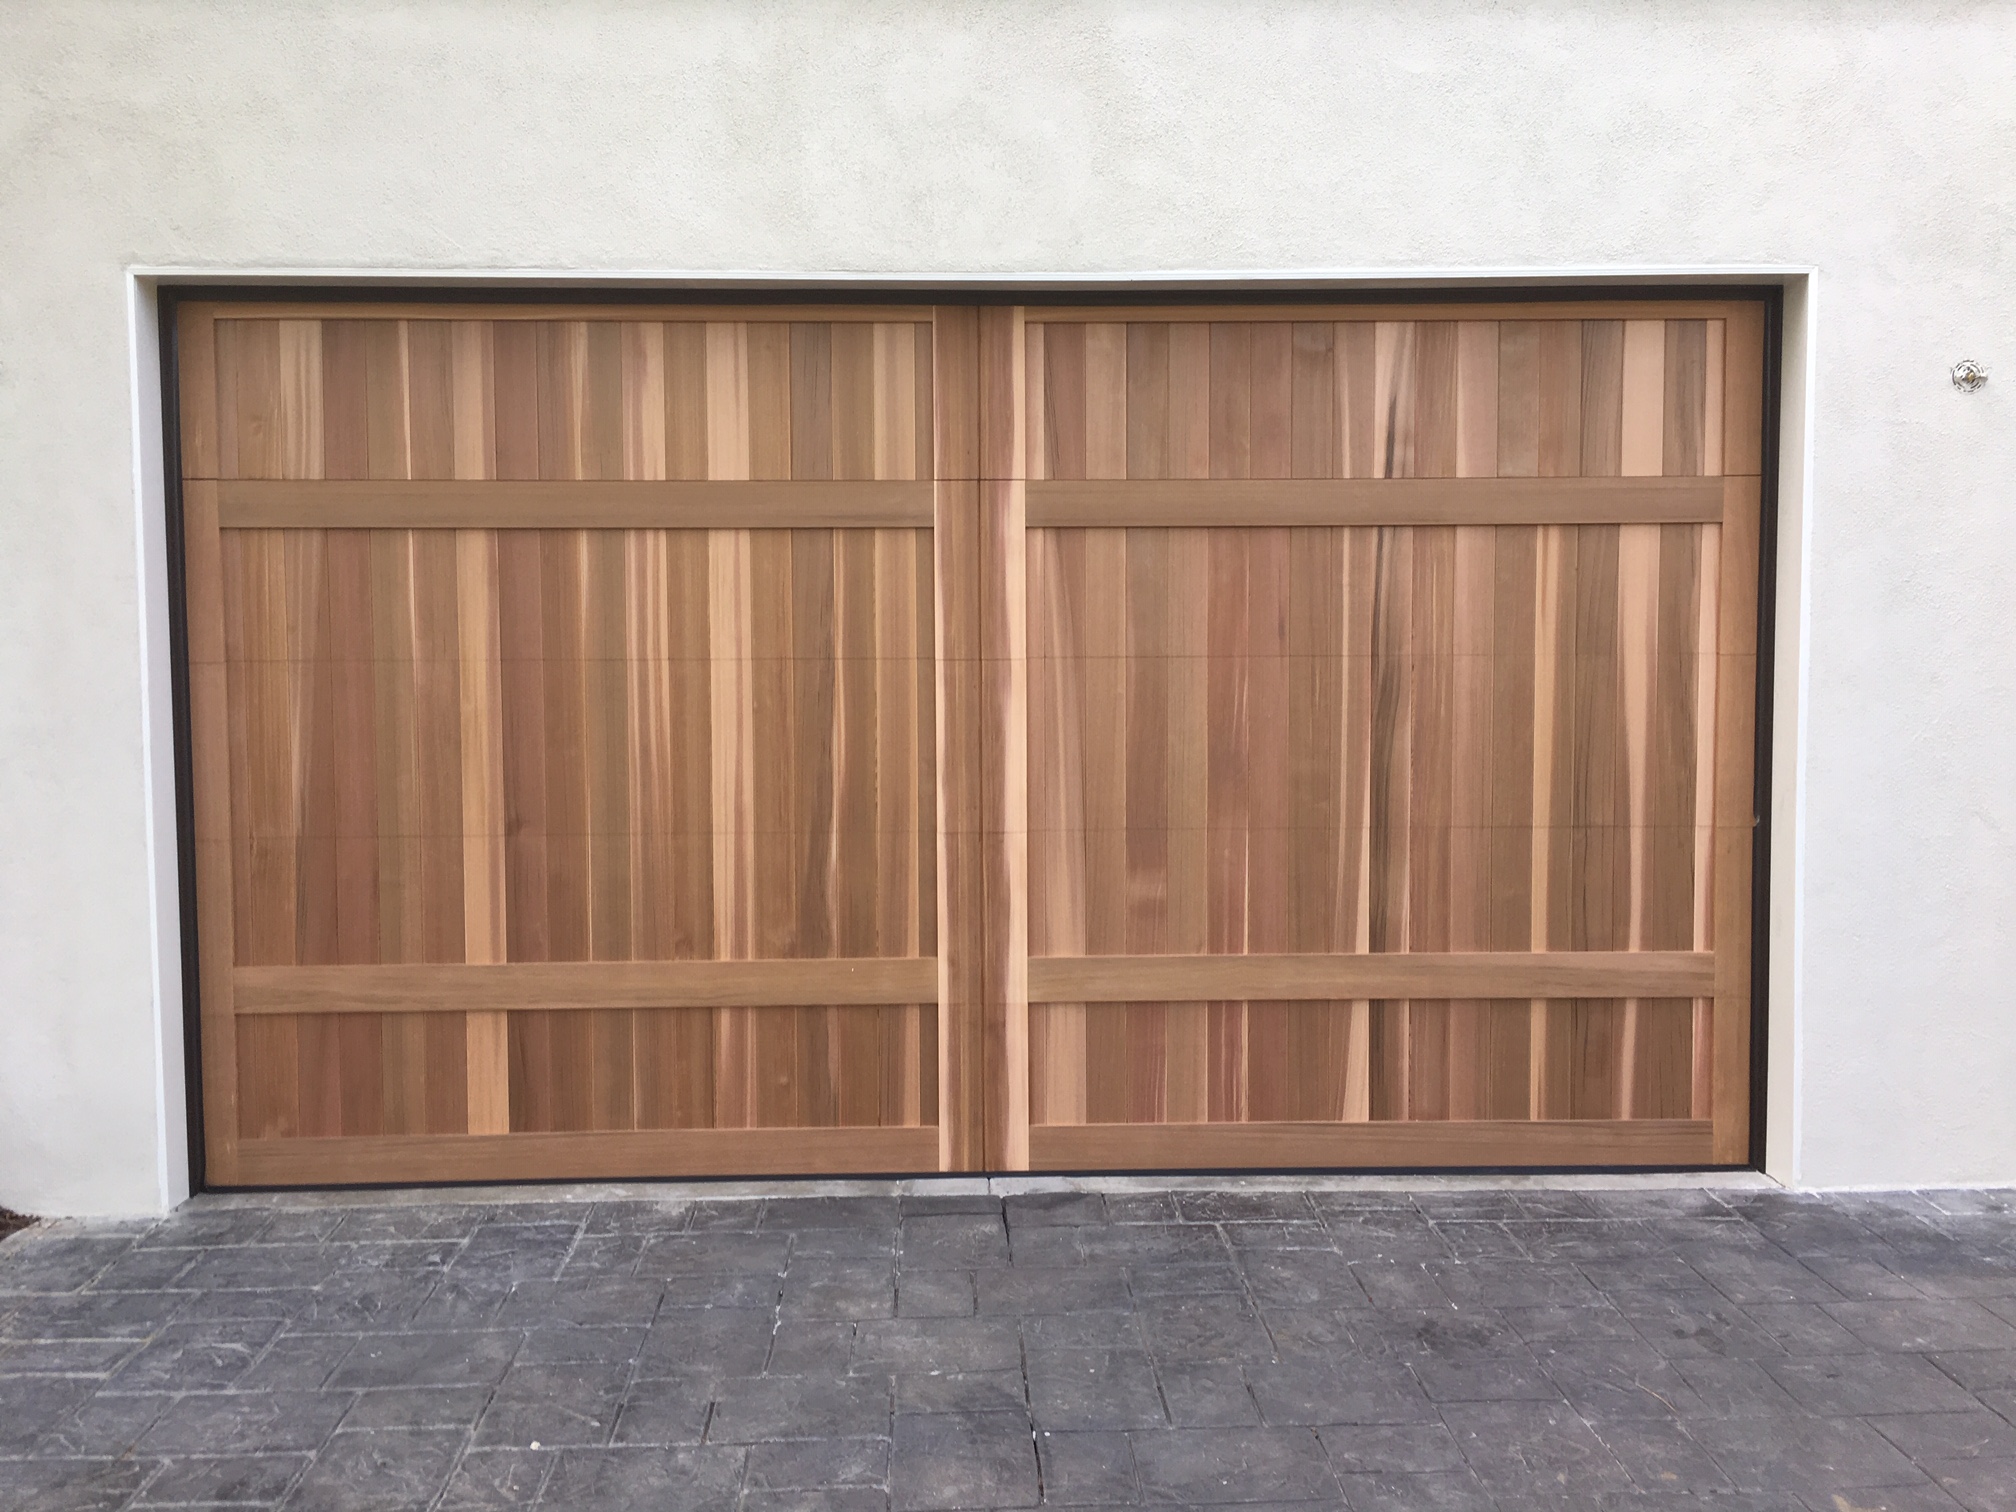 Craftsman Garage Door in Hollywood Hills California